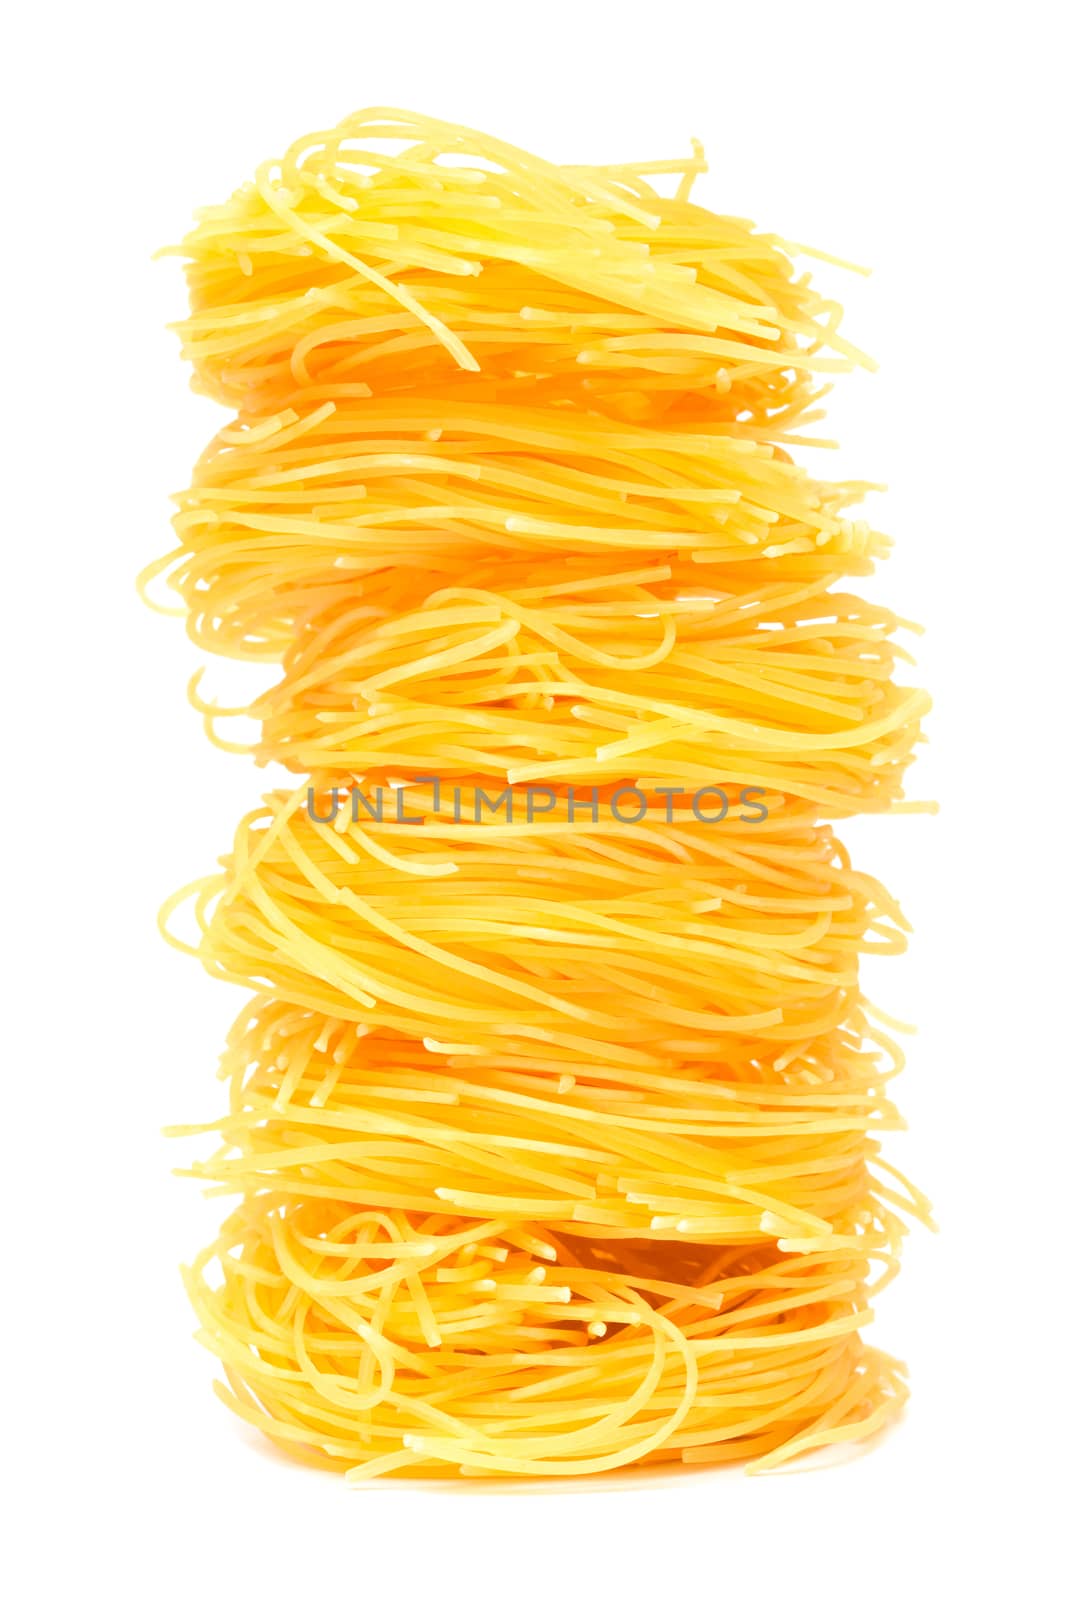 beautiful pasta by terex